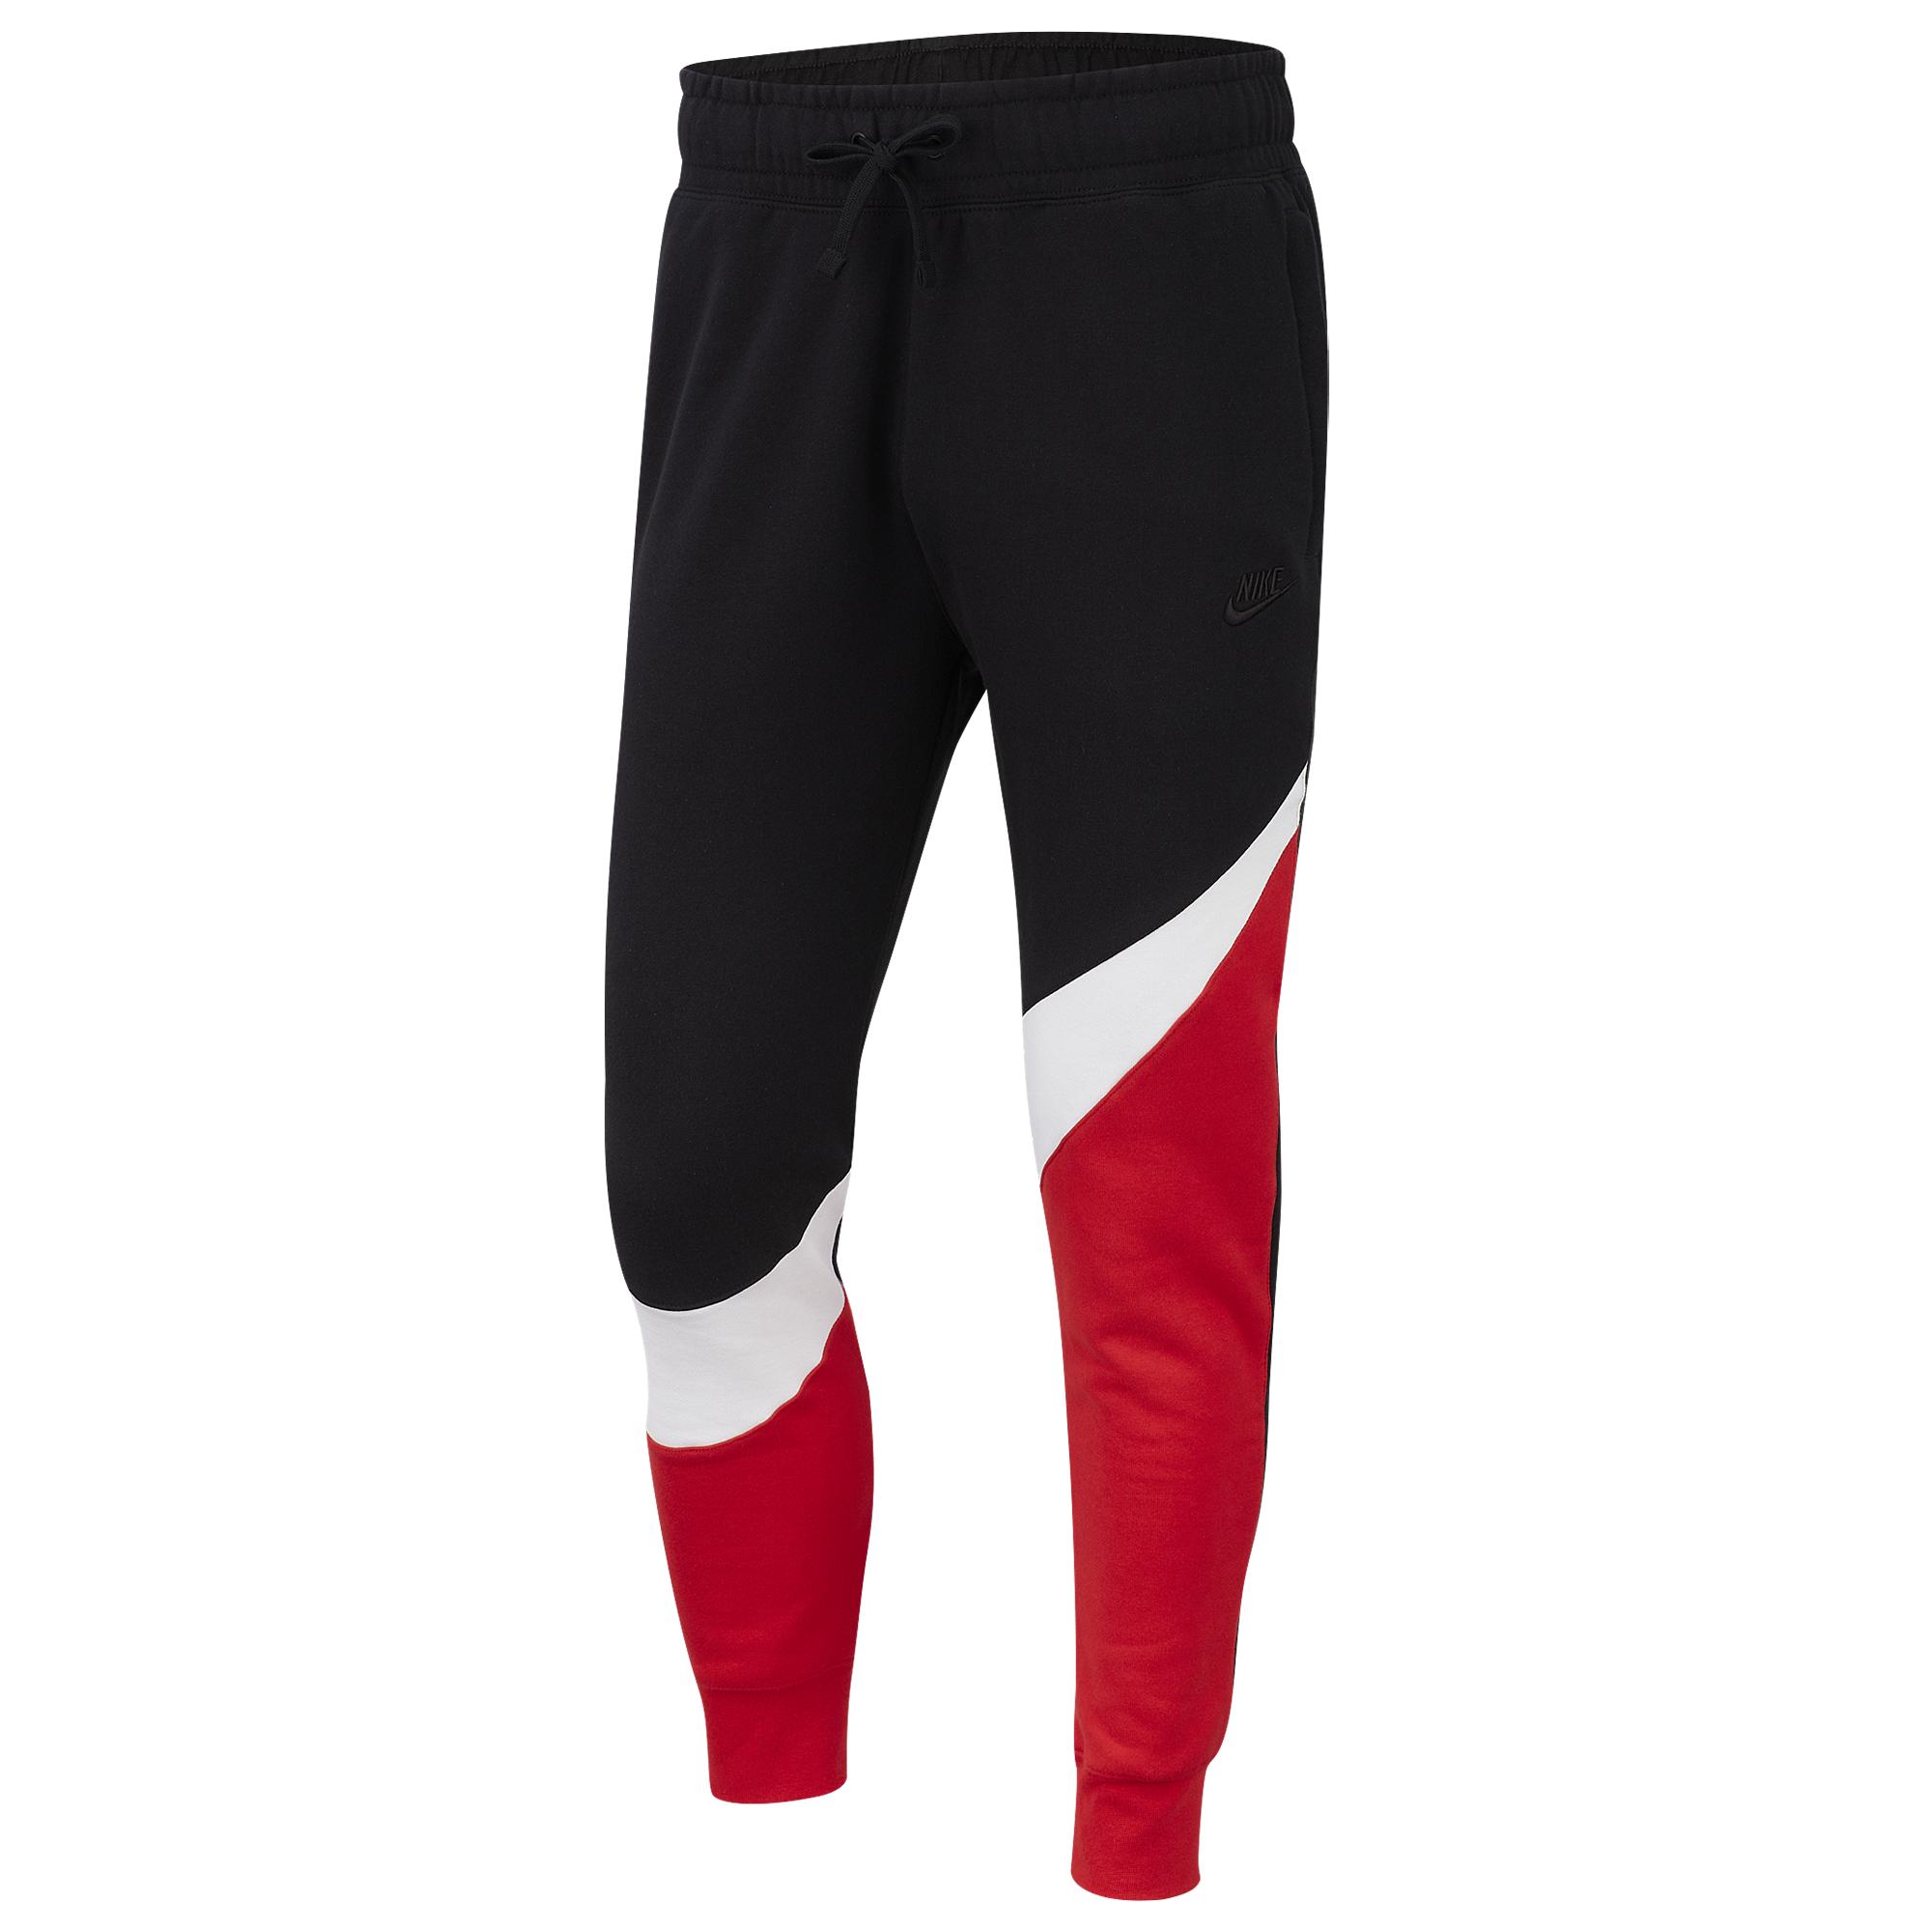 Nike Cotton Large Swoosh Pants in Black/White University Red (Black) for  Men - Lyst